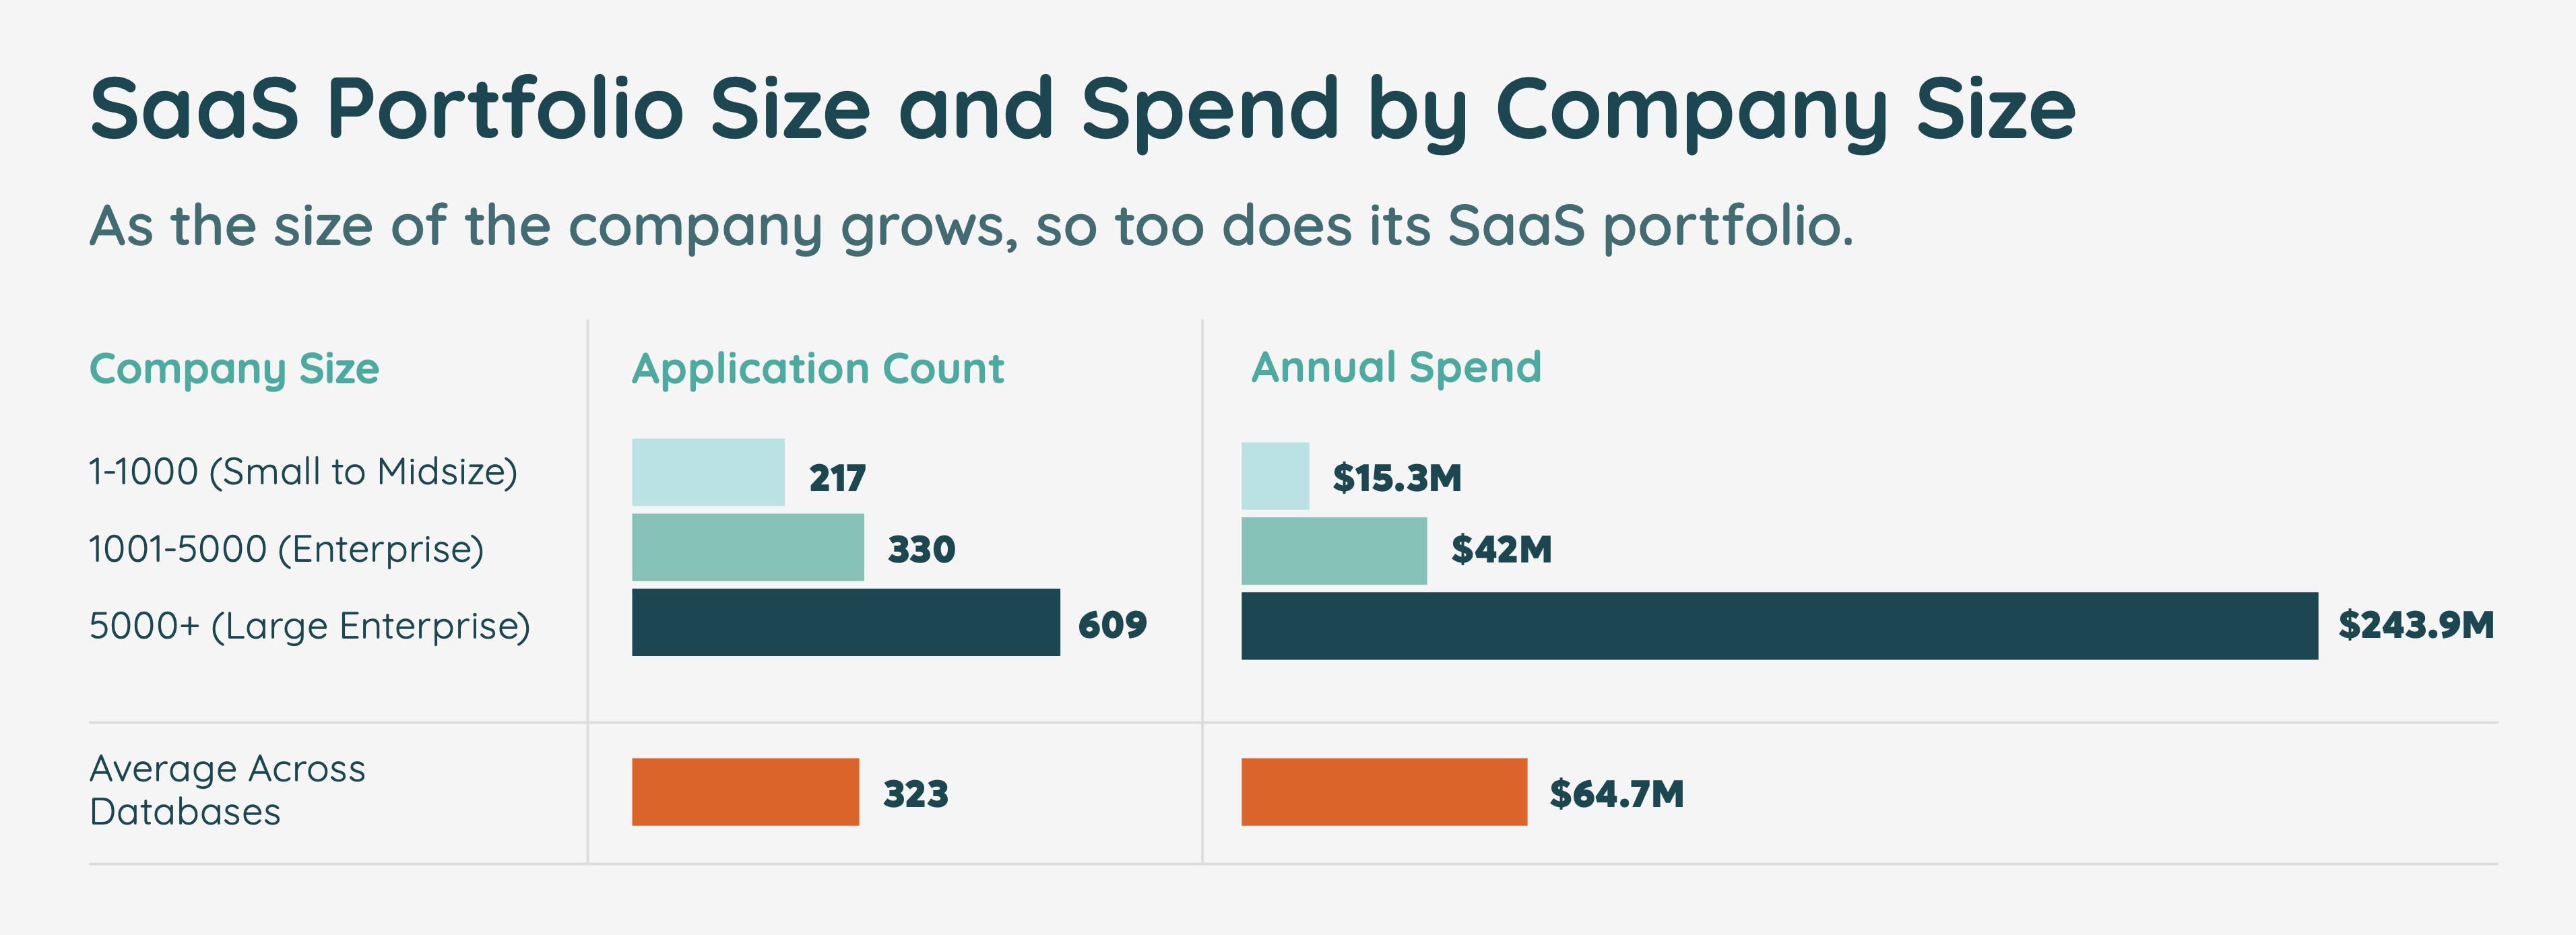 SaaS Portfolio Size and Spend by Company Size